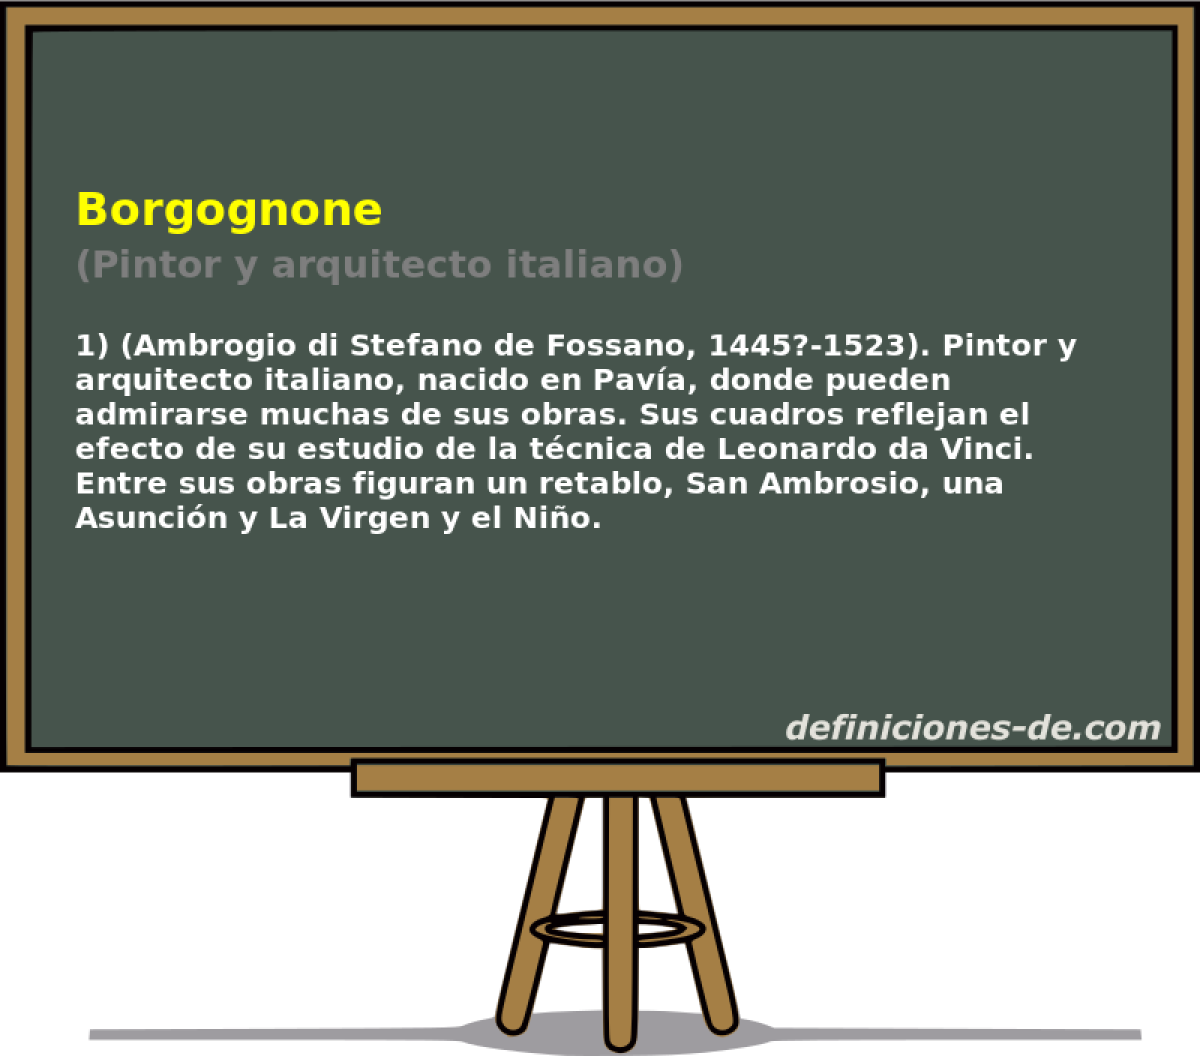 Borgognone (Pintor y arquitecto italiano)